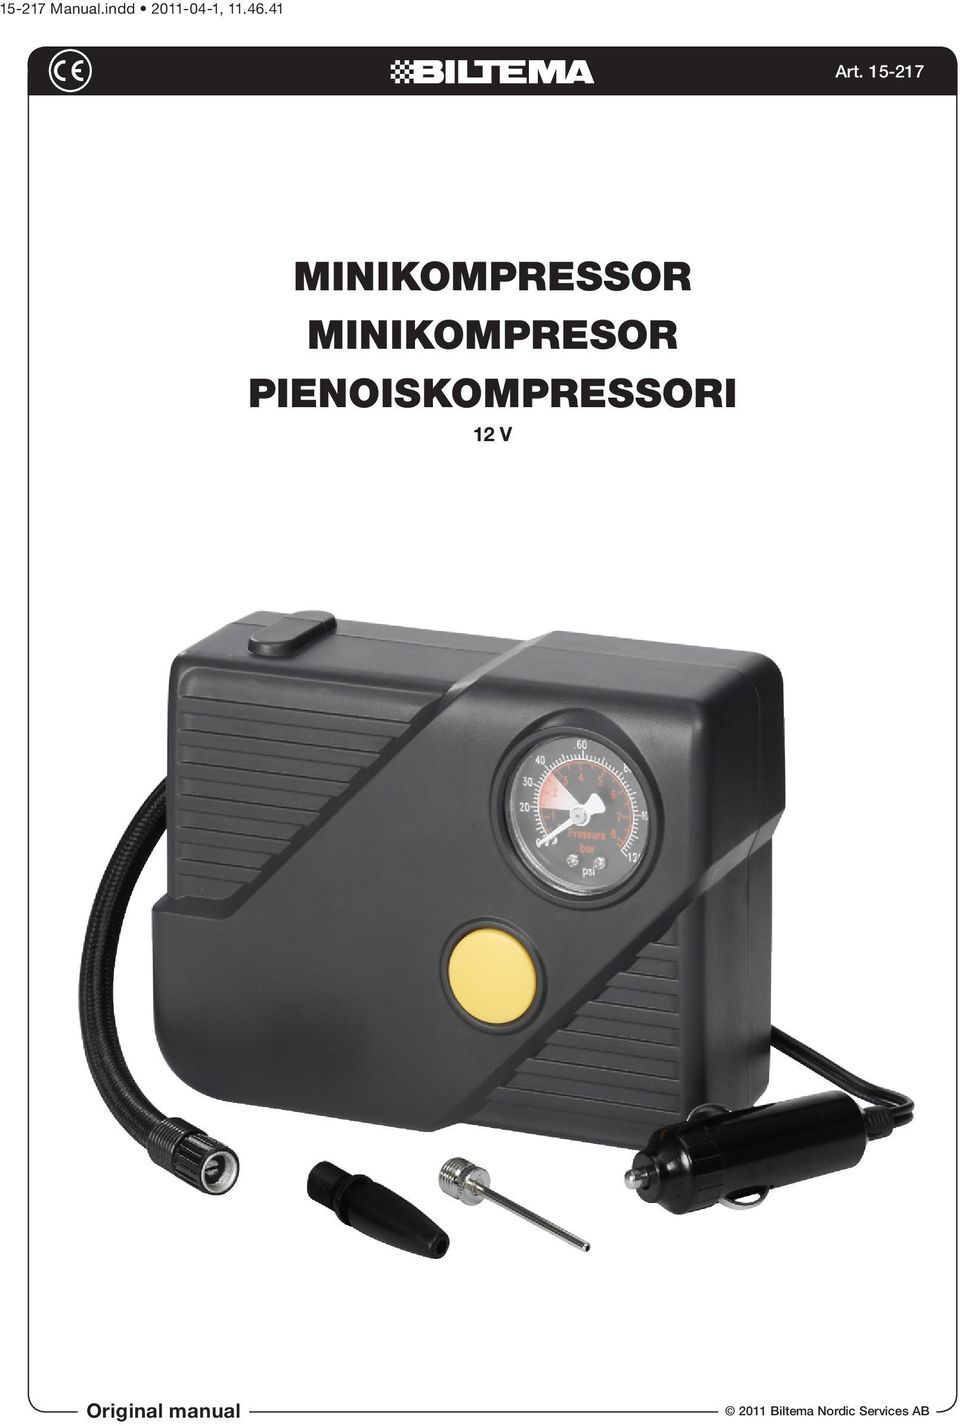 15-217 Minikompressor Minikompresor